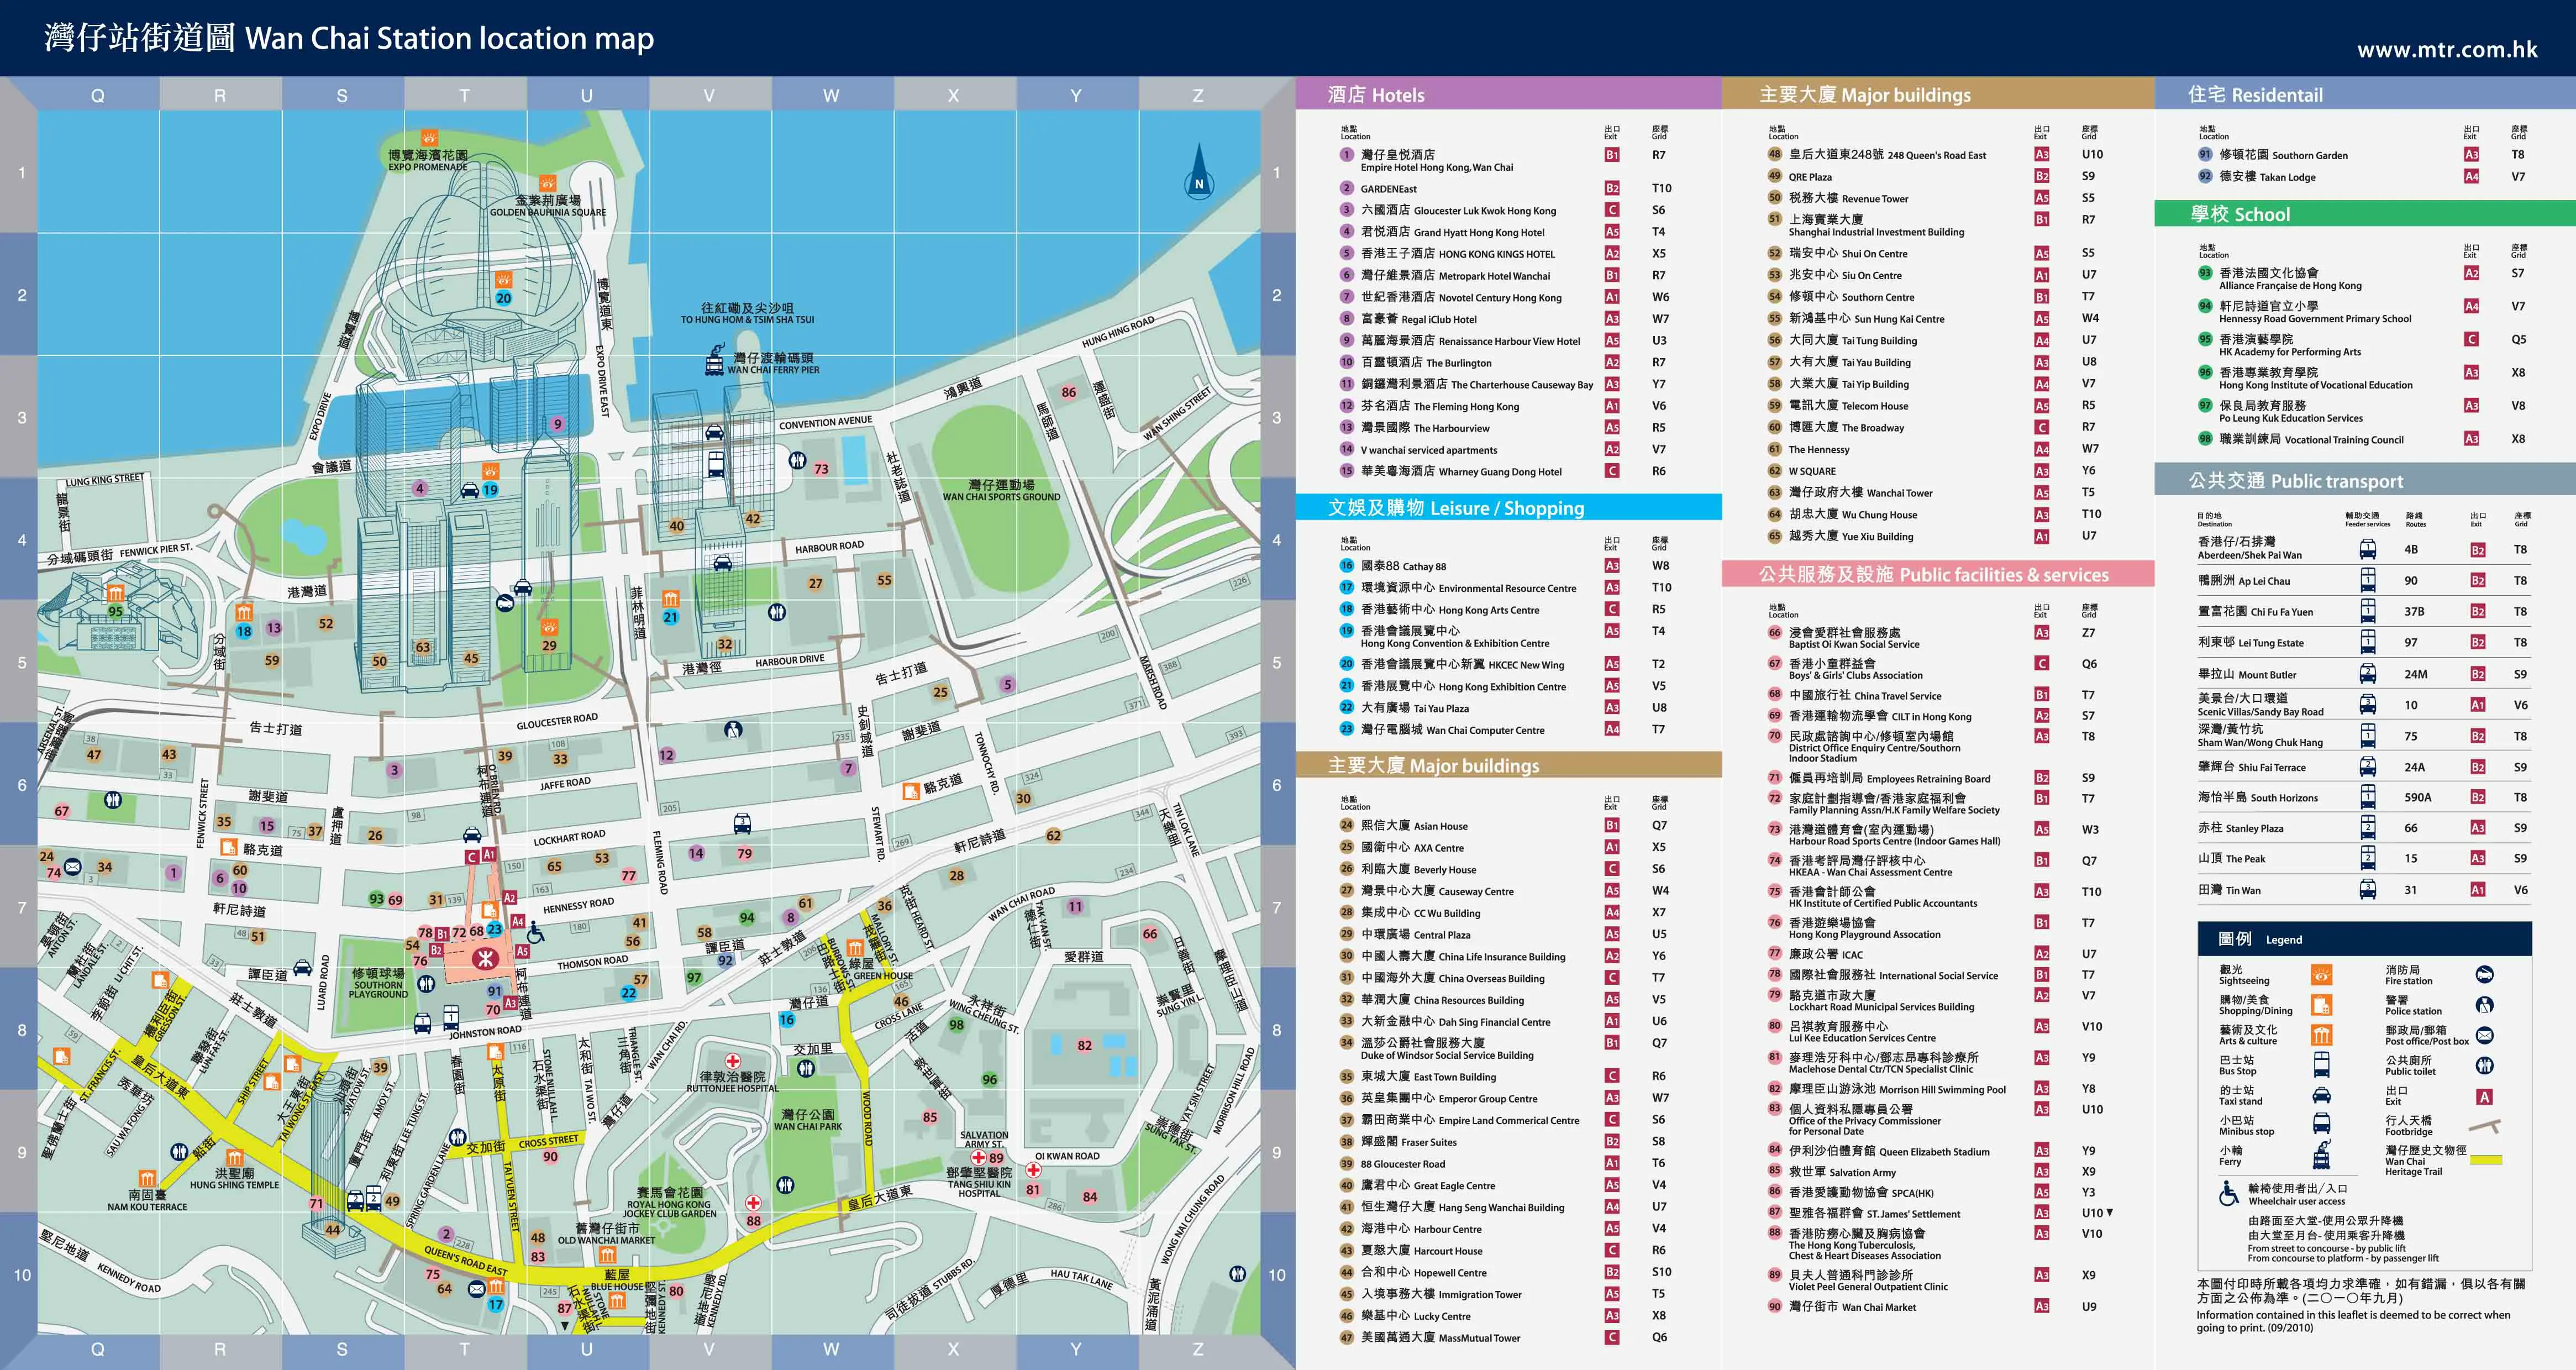 Hong Kong: Wan Chai MTR station area map 2012-2013